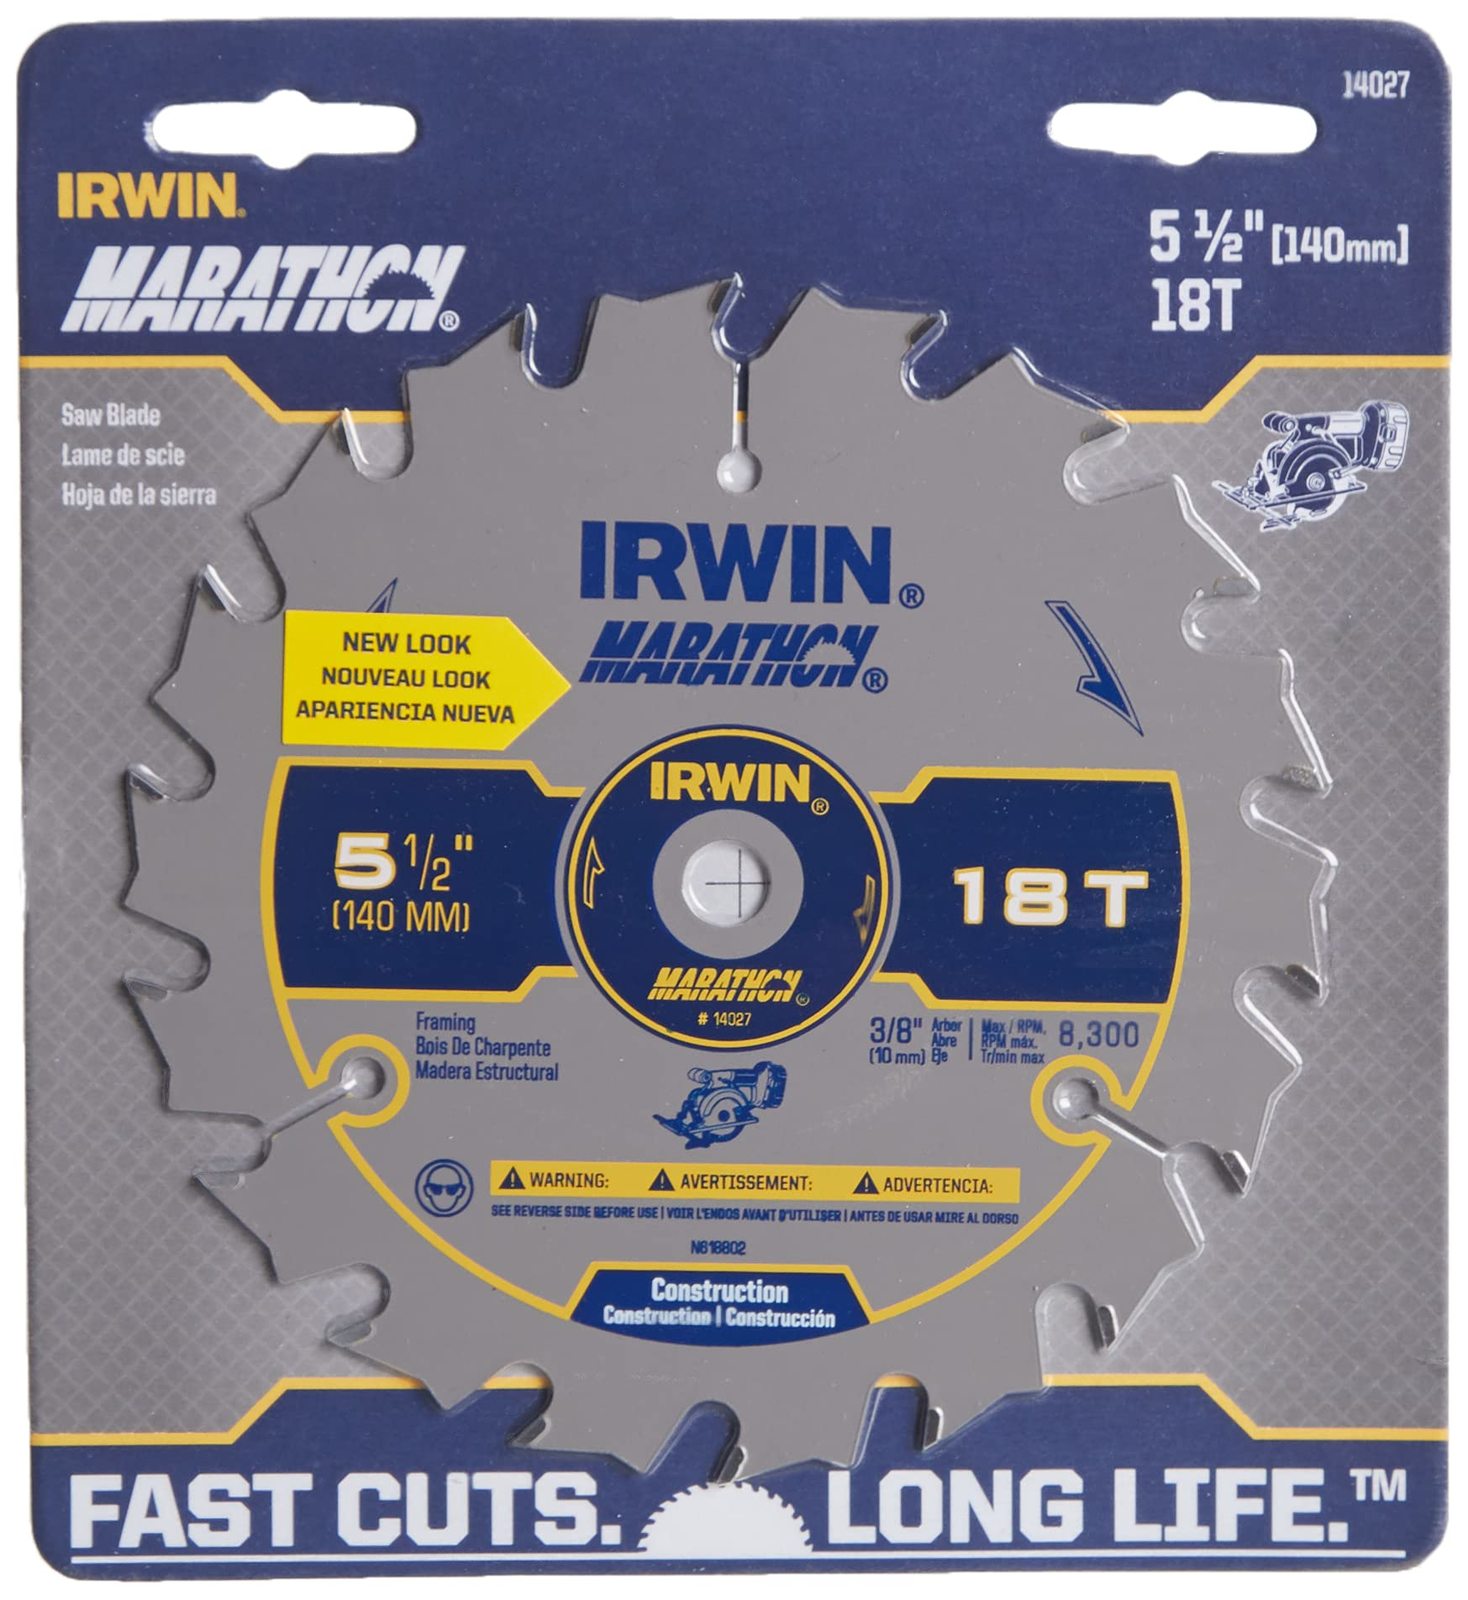 IRWIN Tools MARATHON Carbide Corded Circular and 50 similar items